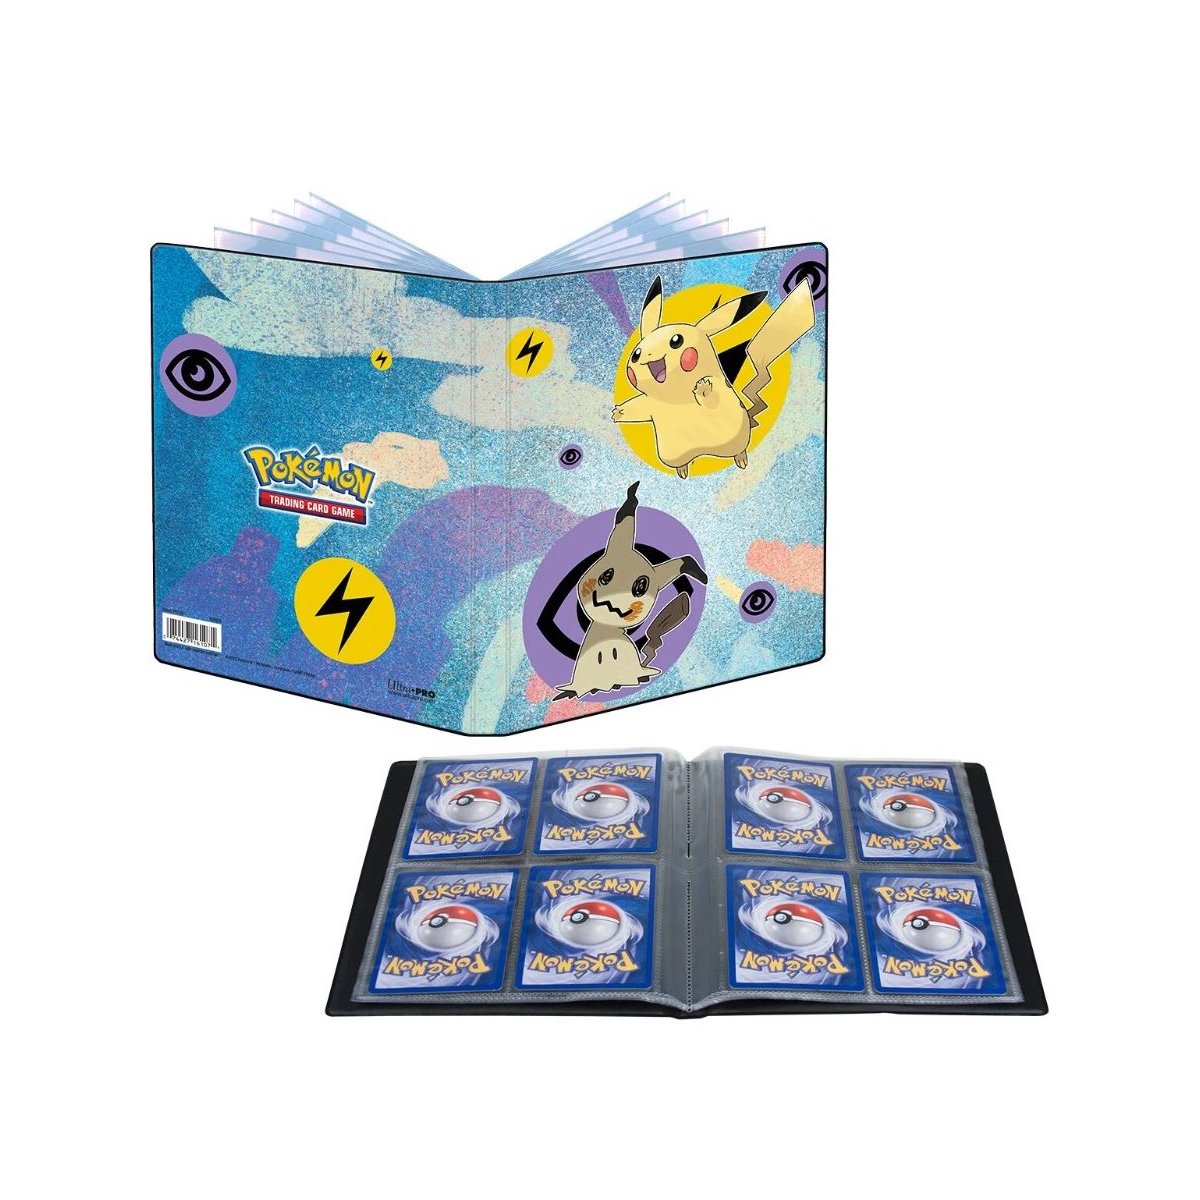 Pokémon Pikachu & Mimikyu 4-Pocket Portfolio